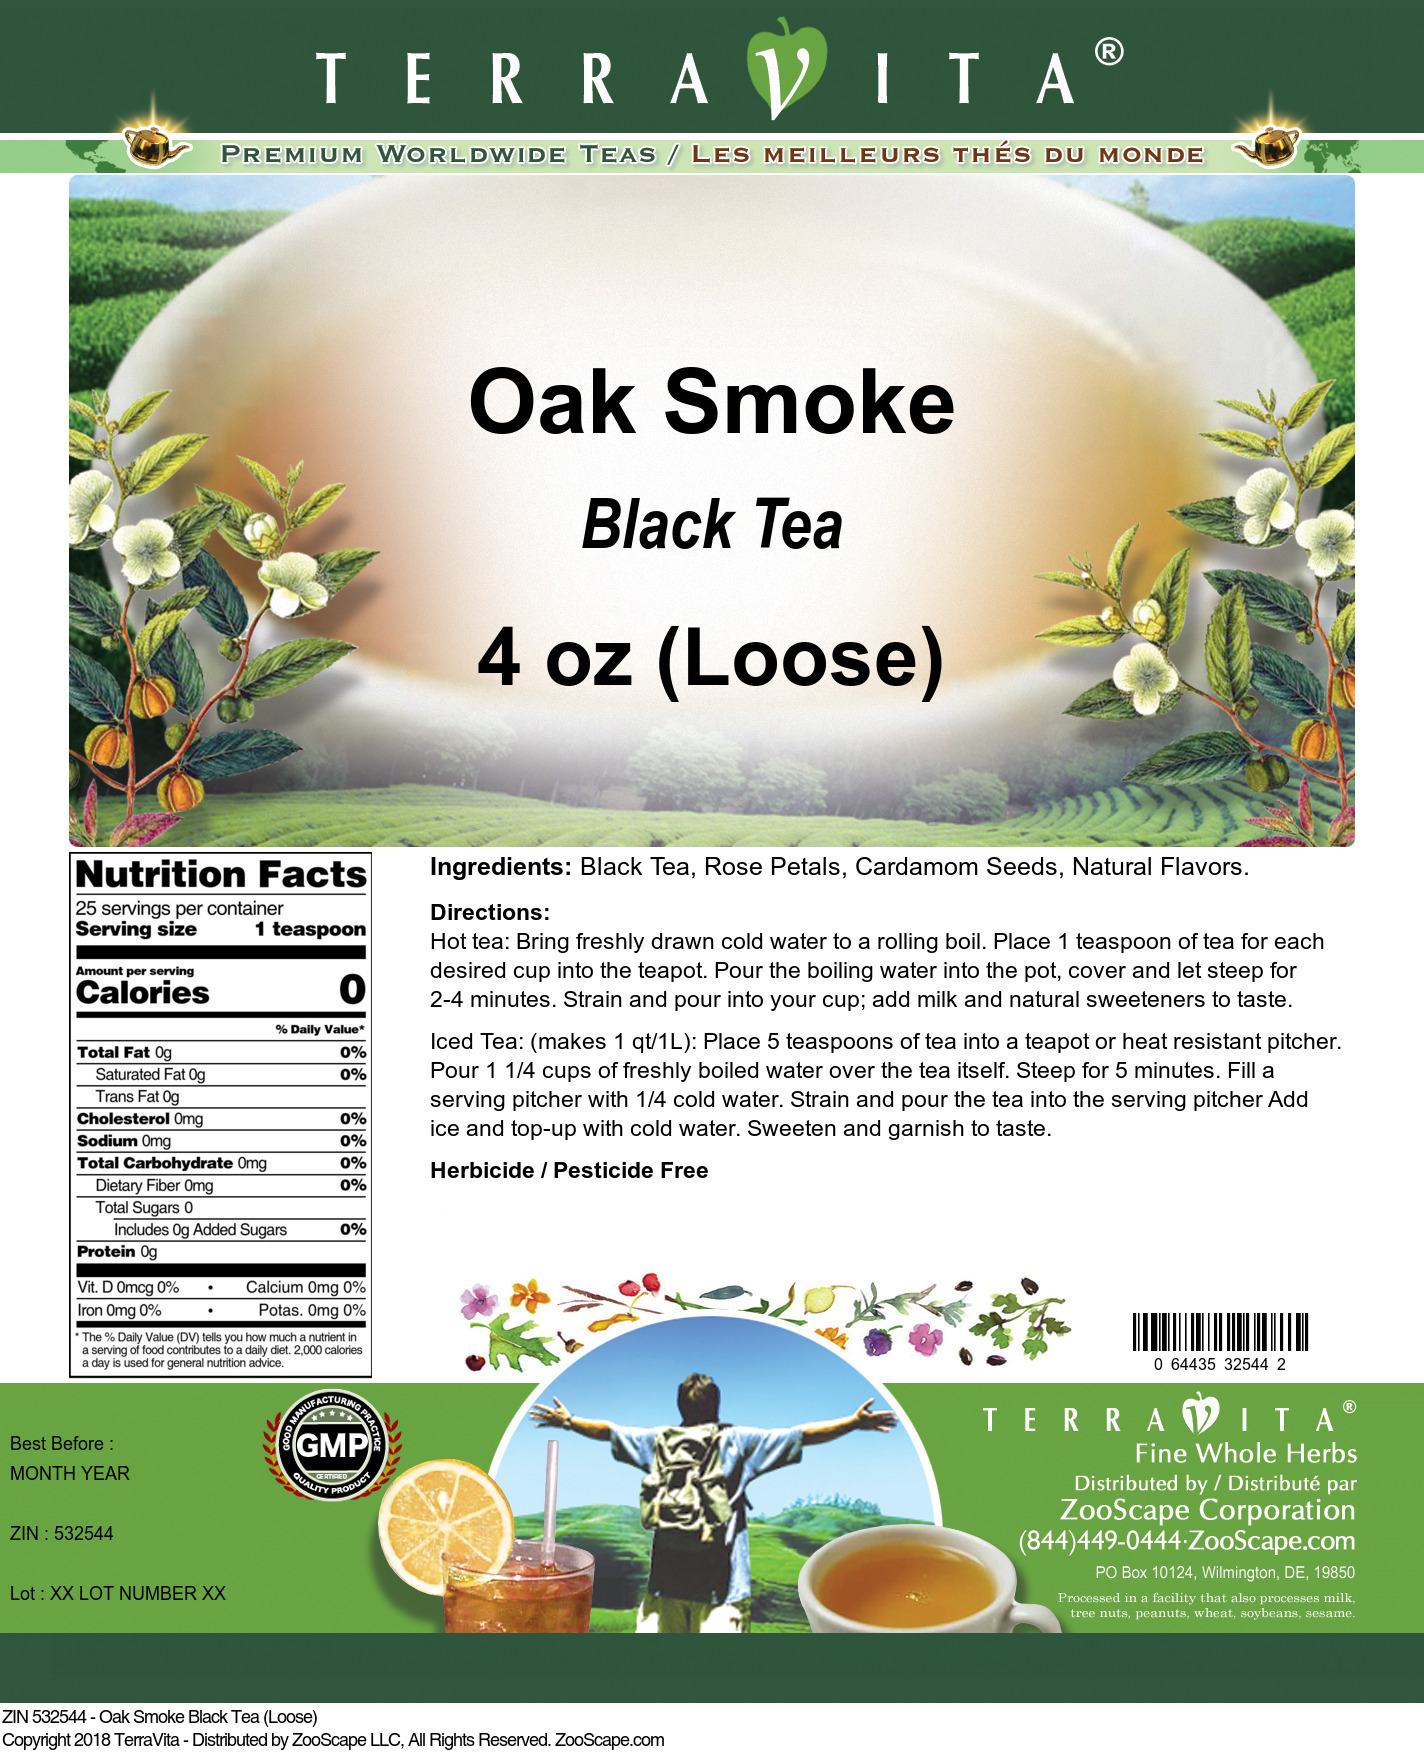 Oak Smoke Black Tea (Loose) - Label